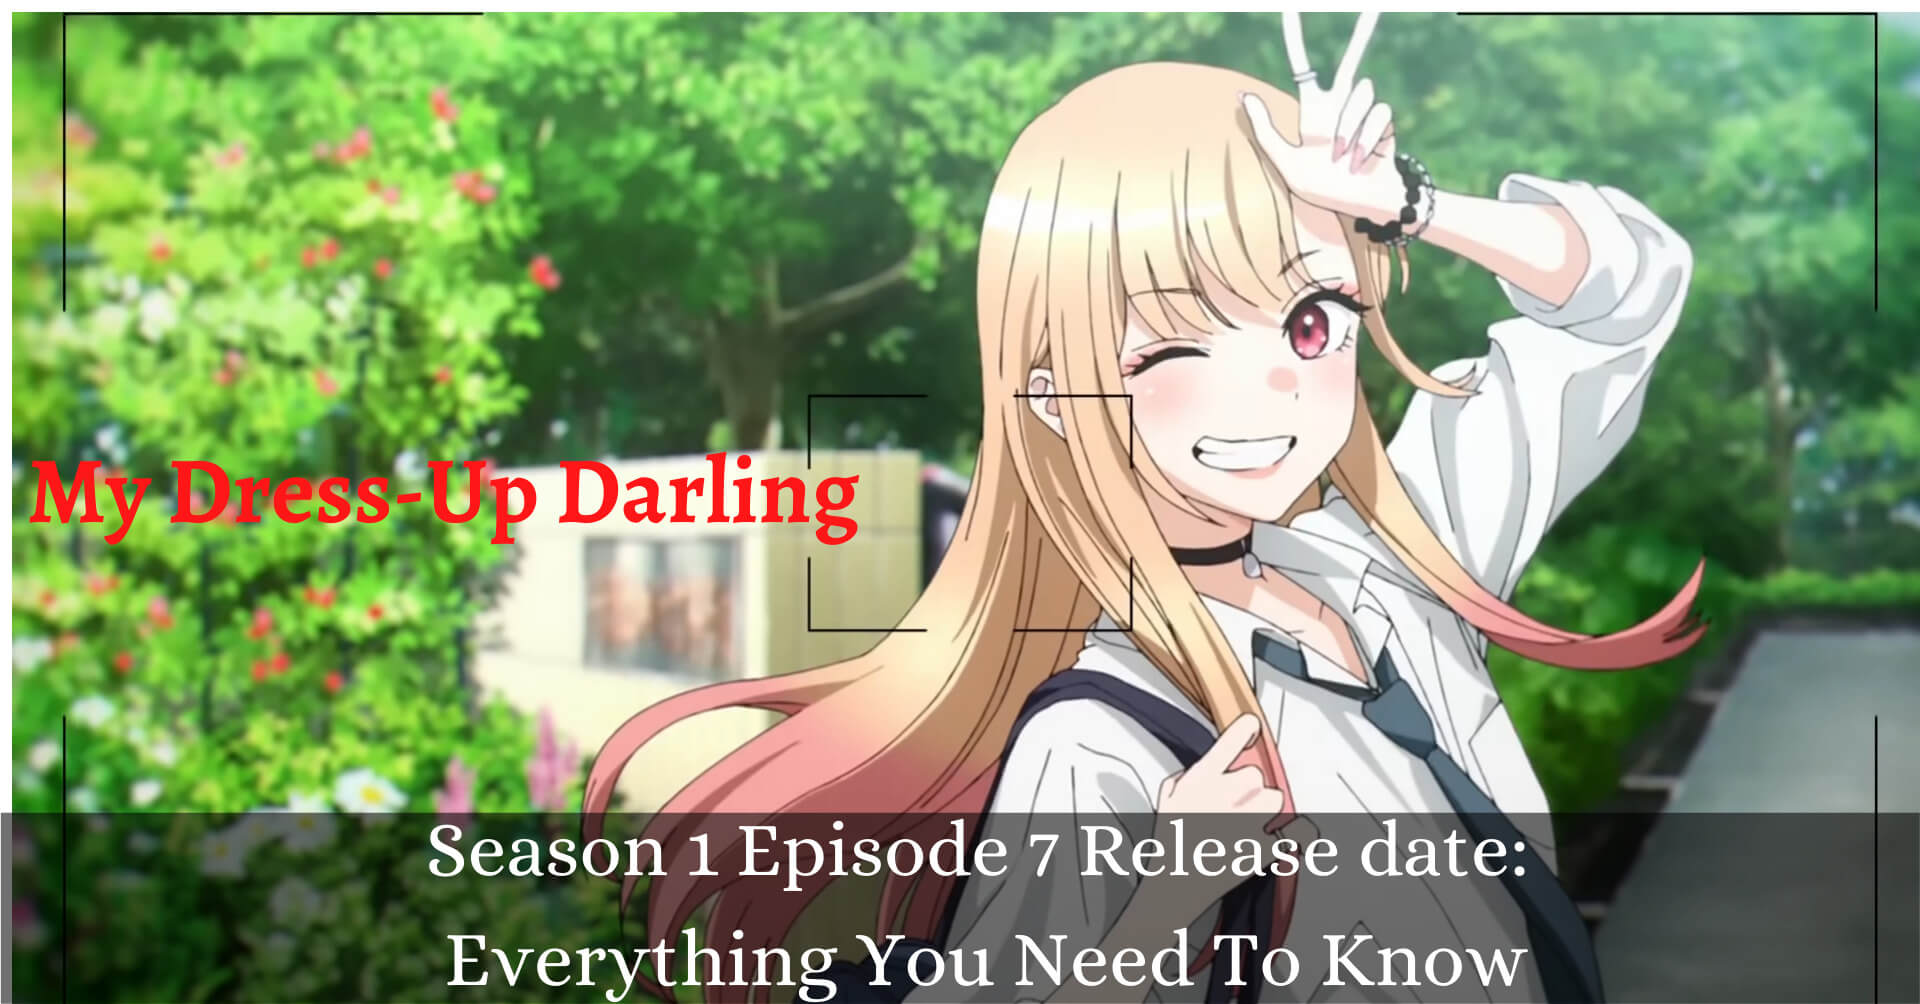 My Dress-Up Darling Season 1 Episode 7 Release date